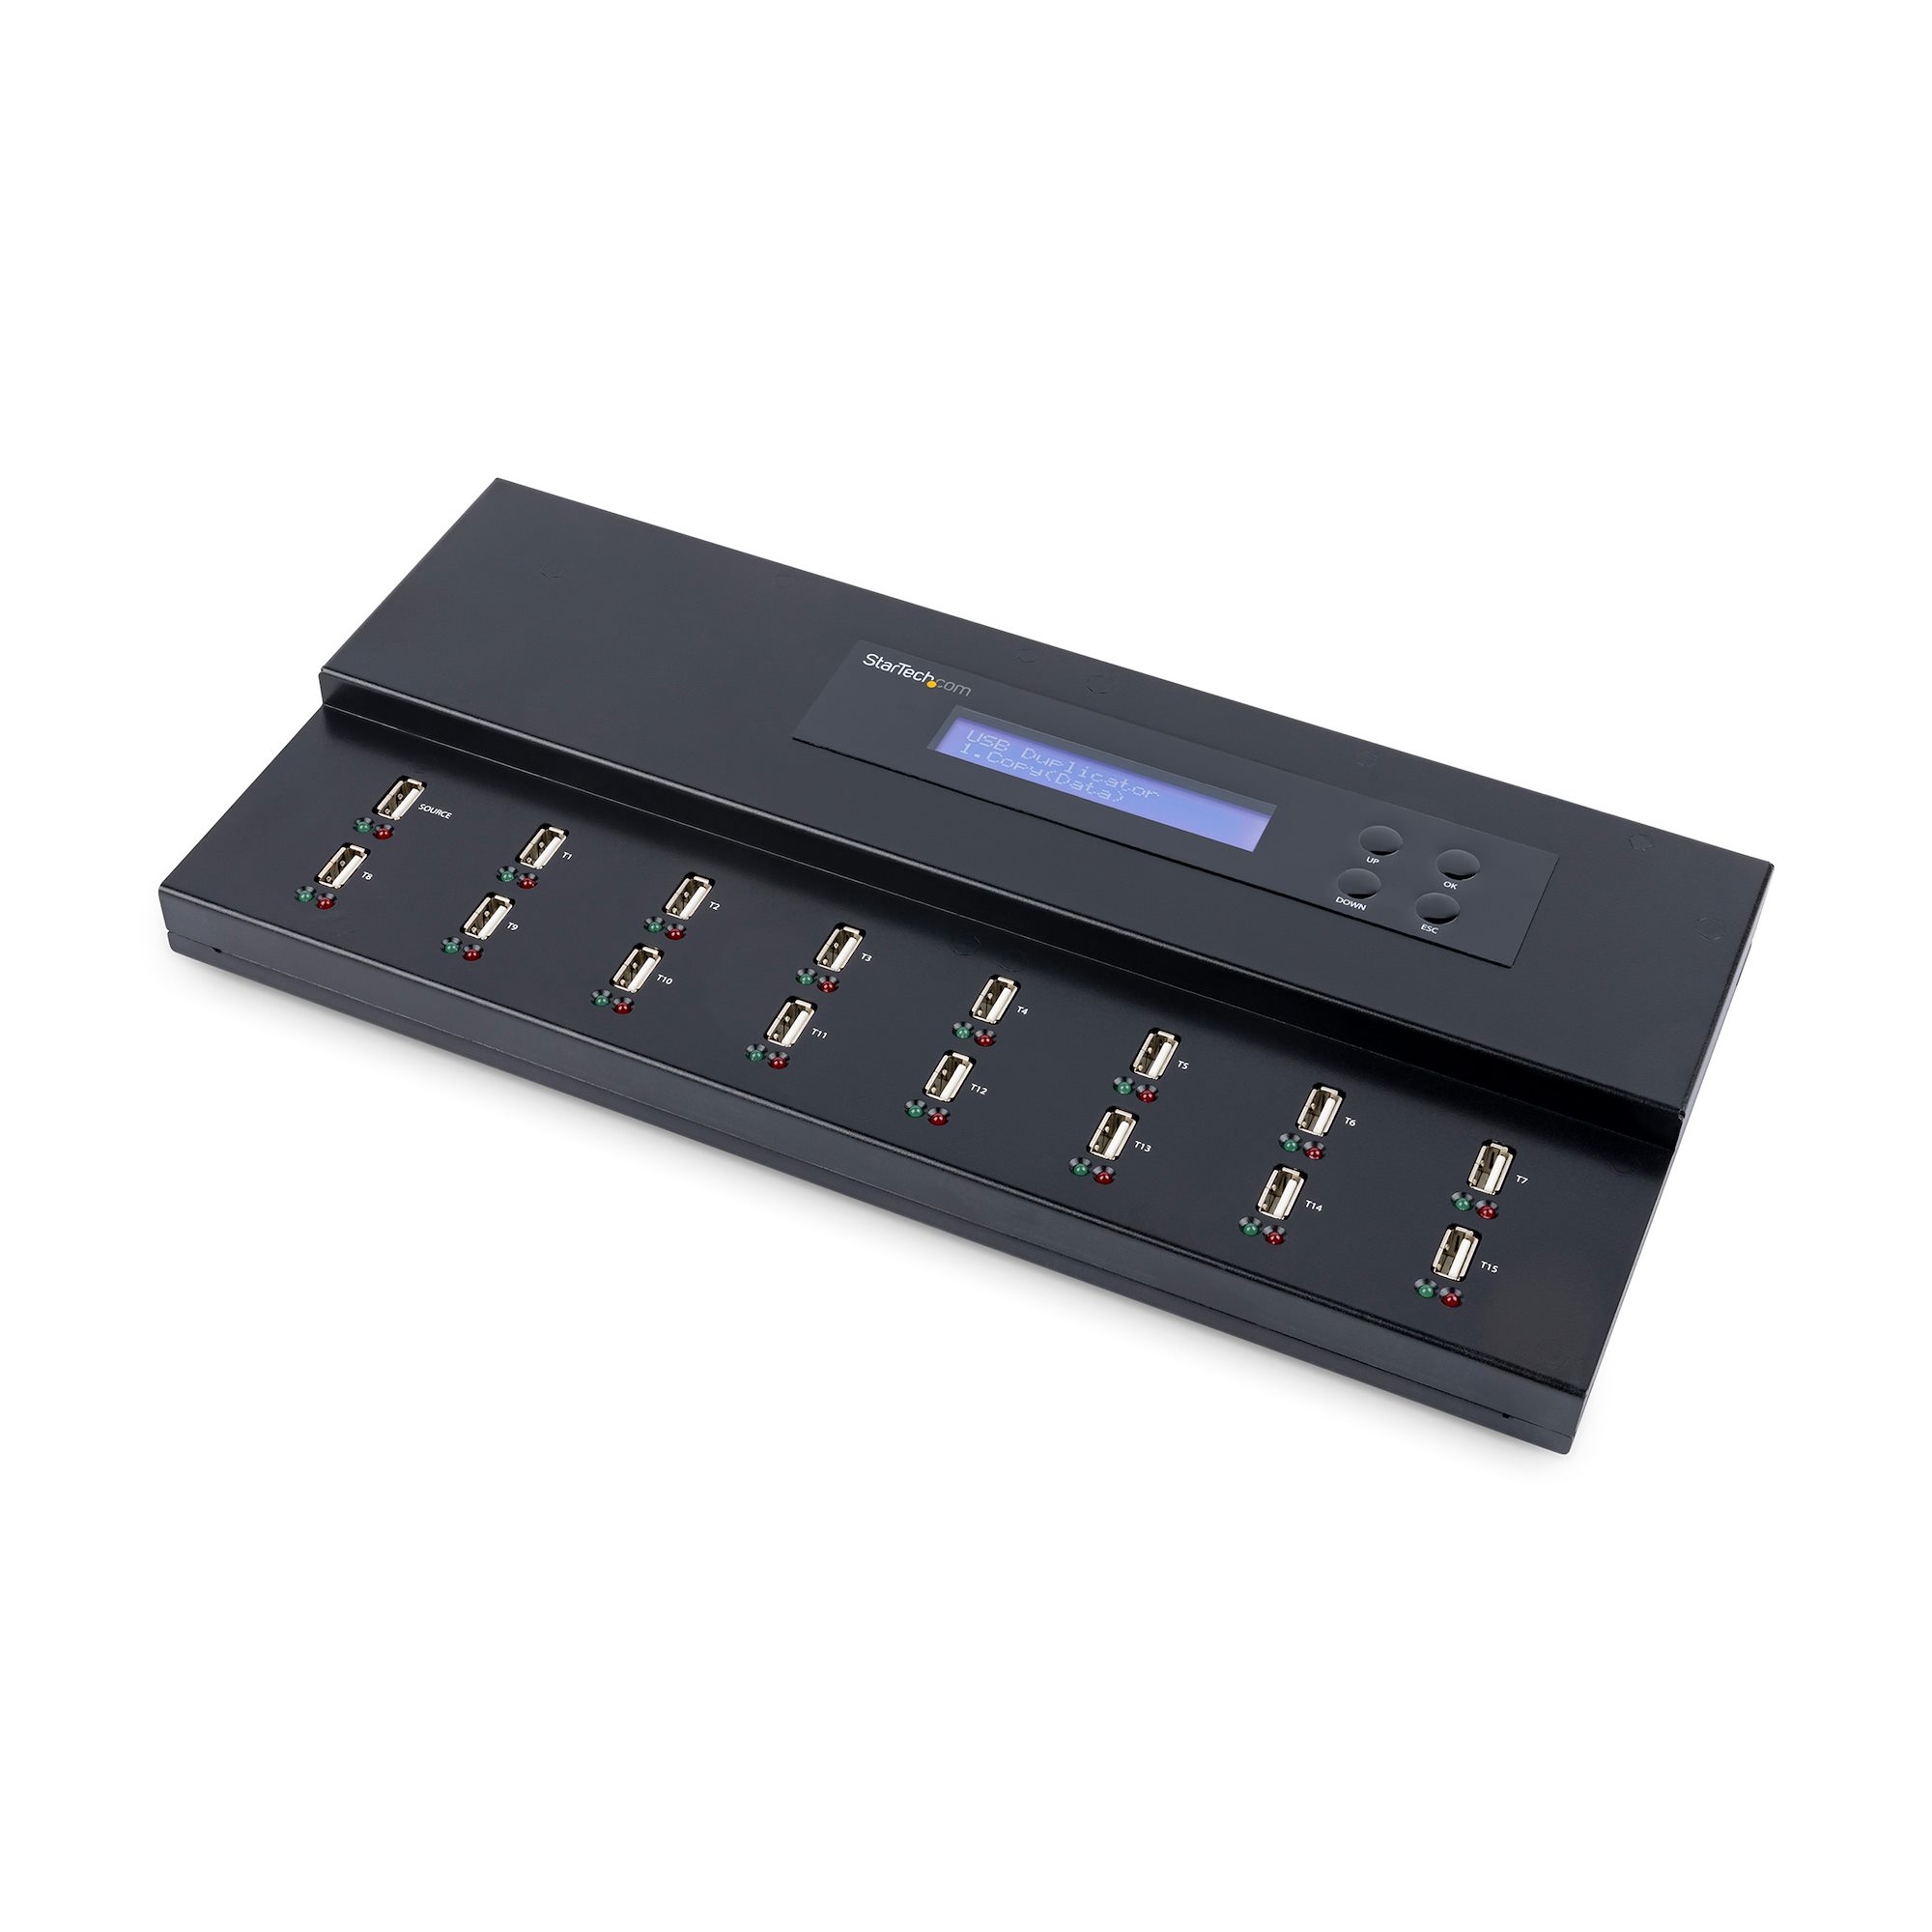 DOD Compliant Flash Media Storage Cloner & Eraser EZ Dupe Pantera 1 to 15 USB Duplicator